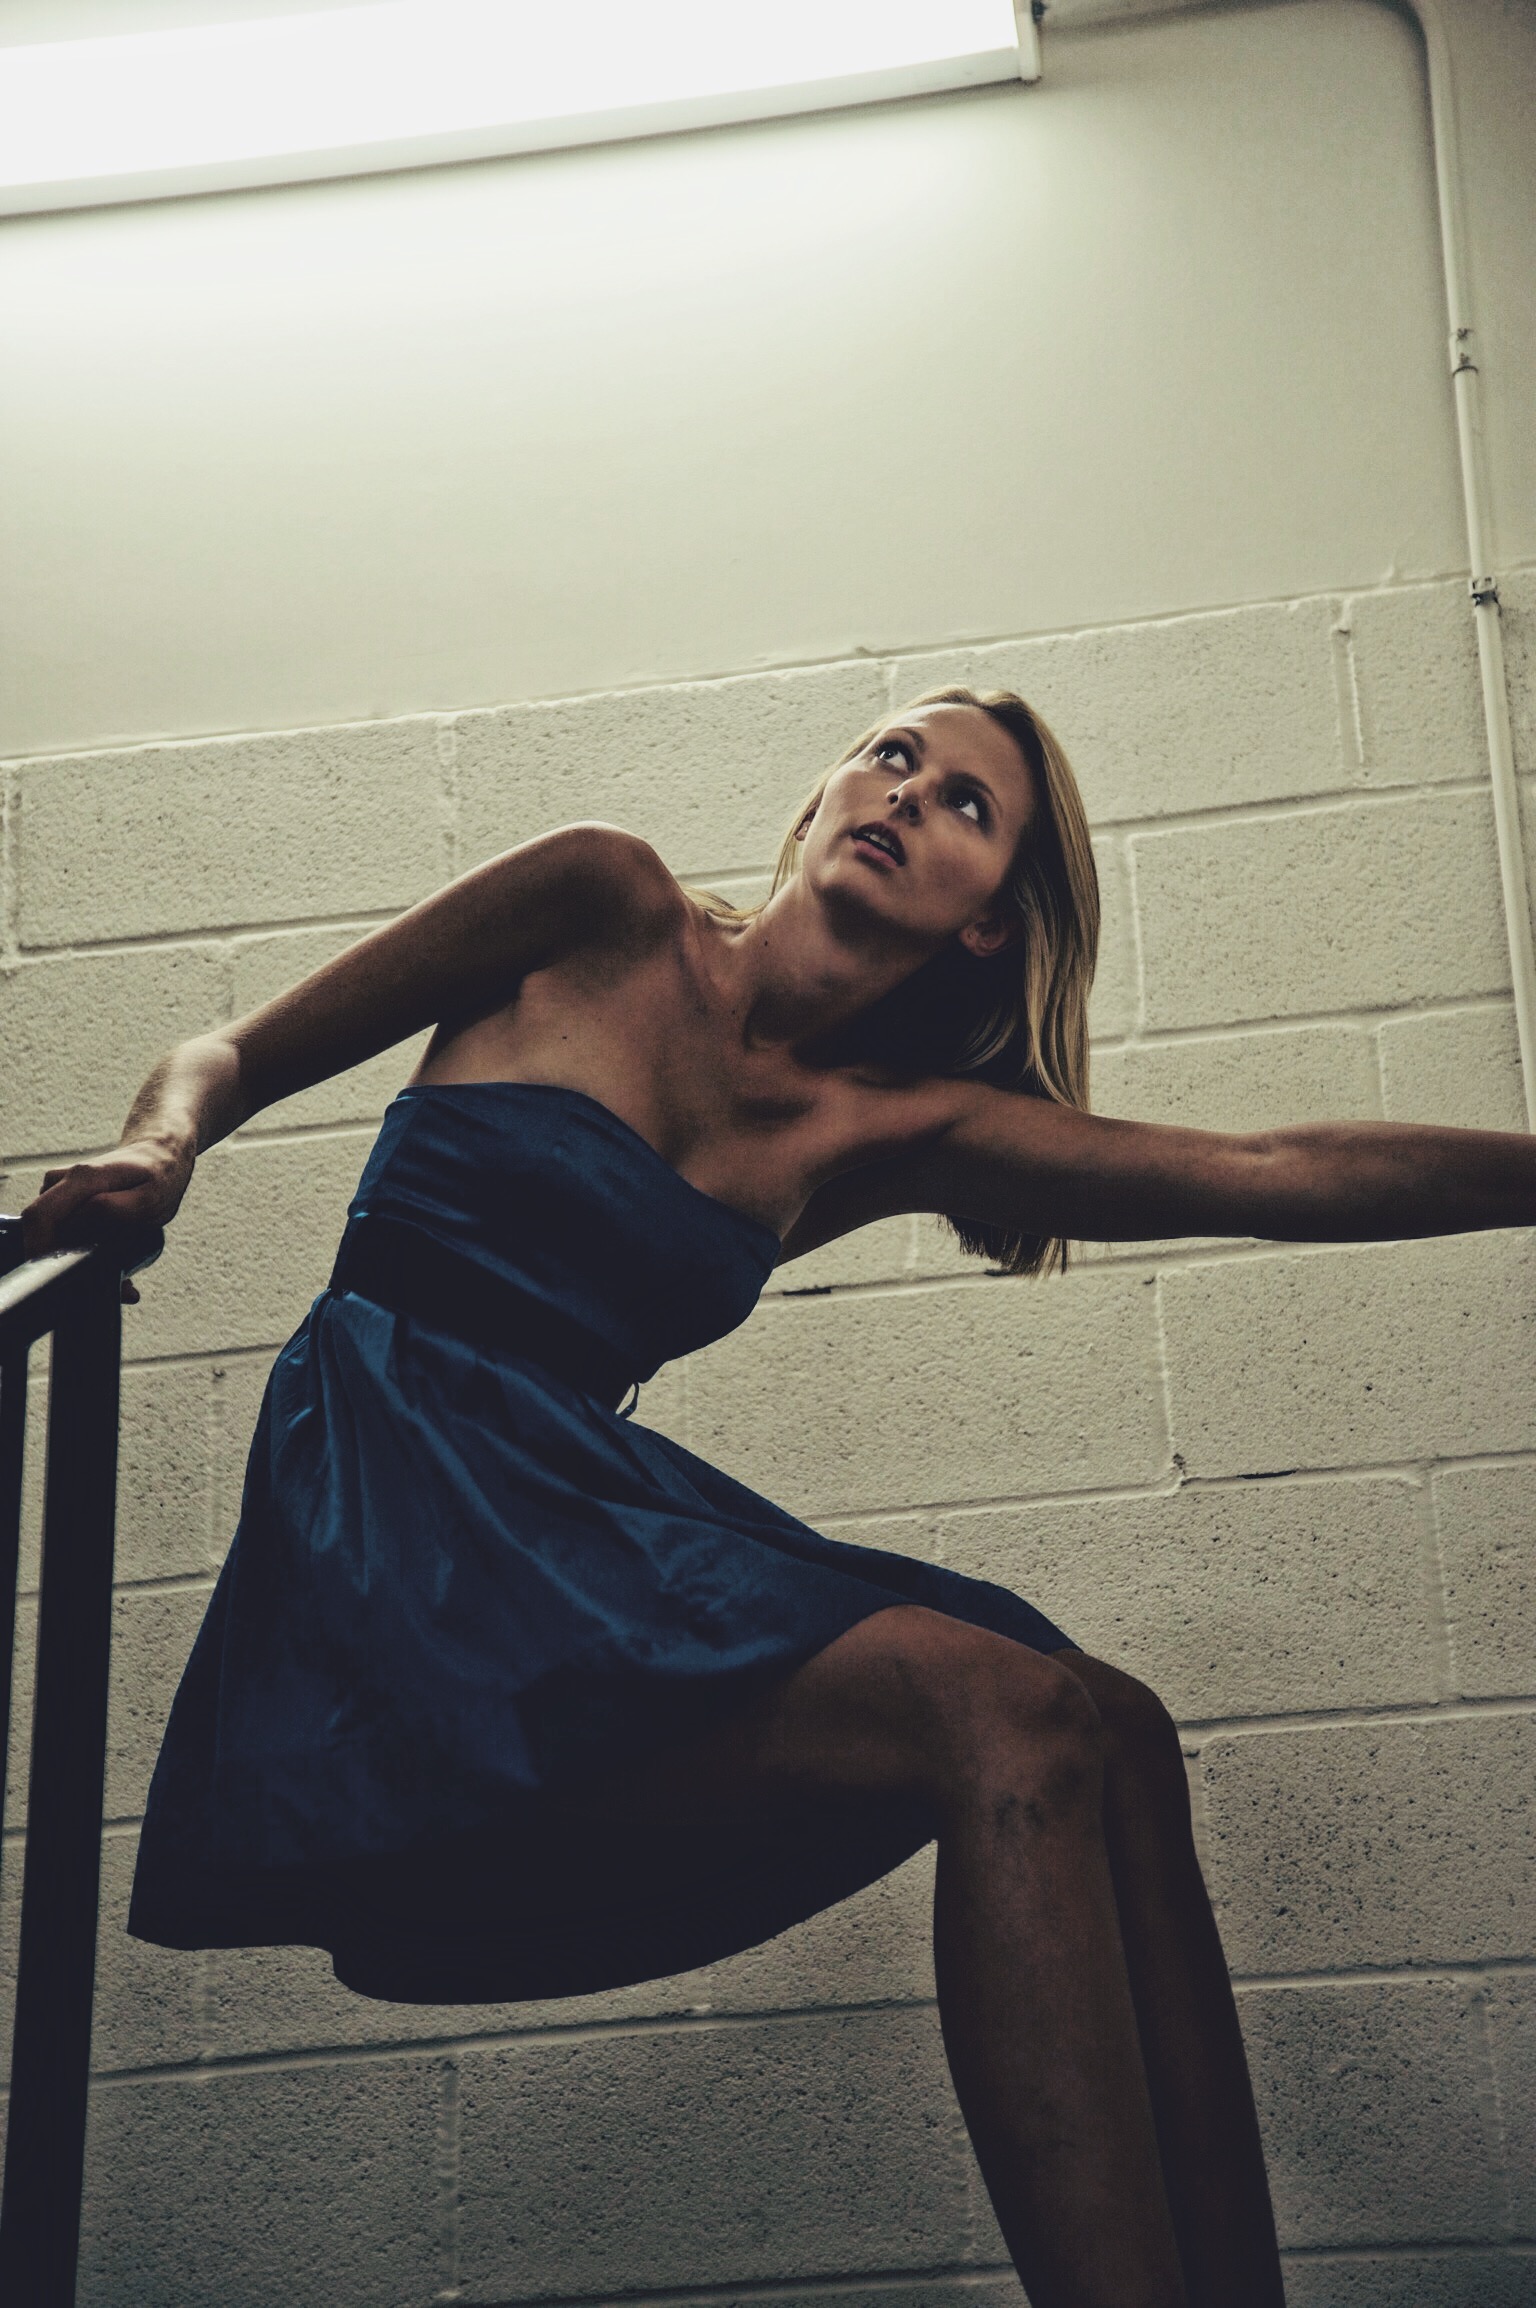 Model Olivia Banaszewski in a stairwell and blue dress from the photoshoot 'Desire' by Jason Kraynek